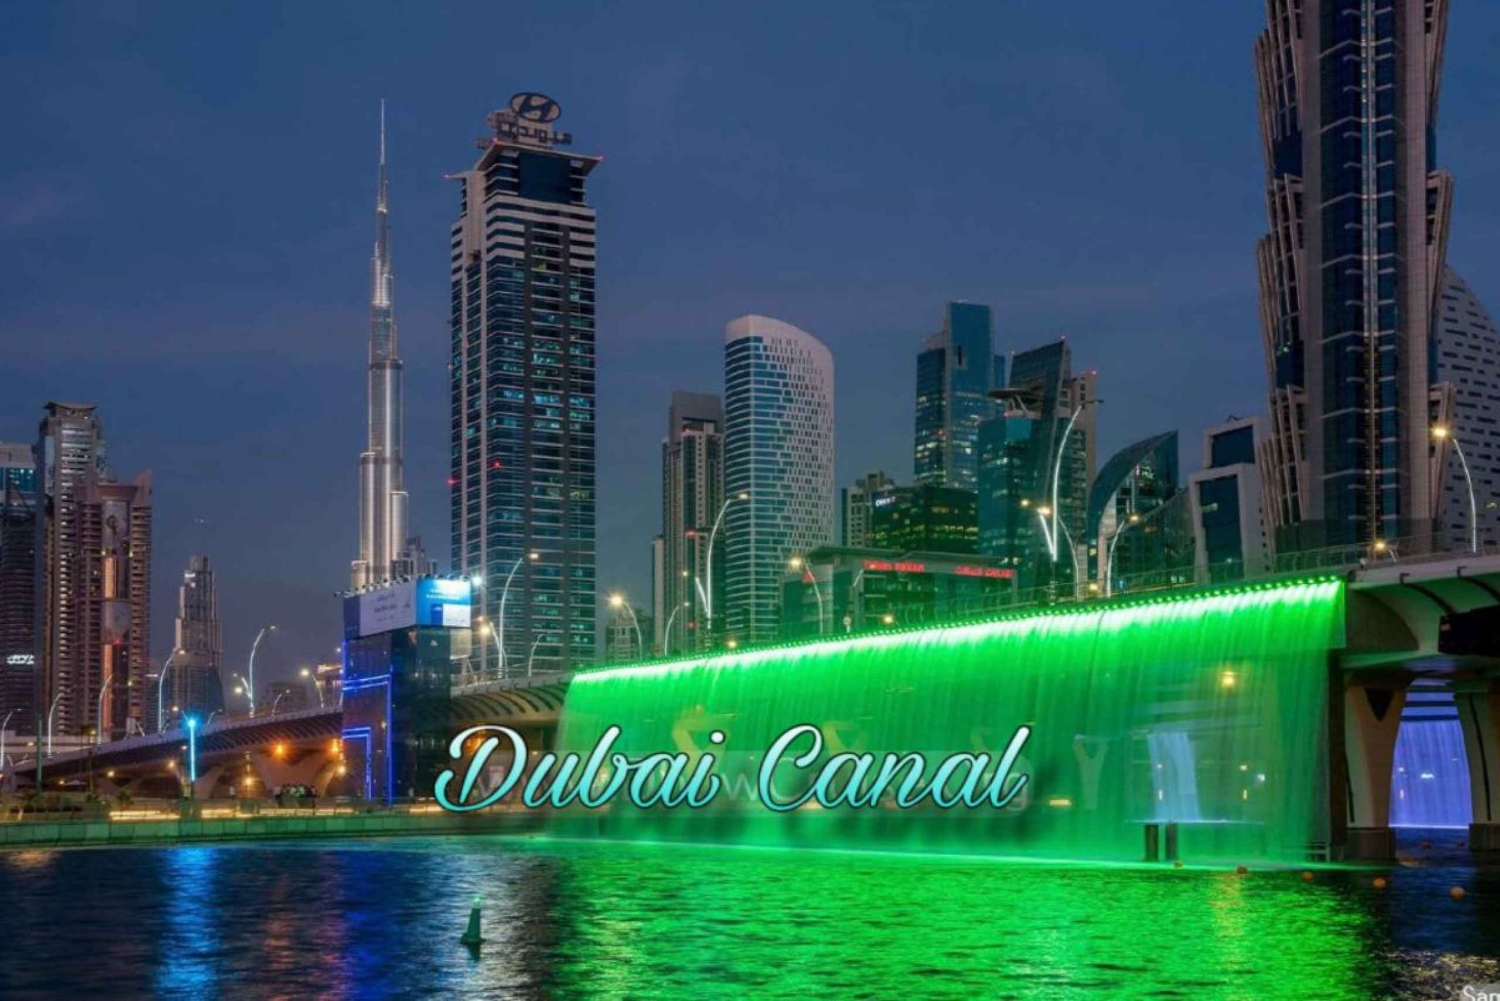 The Beautiful views of Dubai Canal